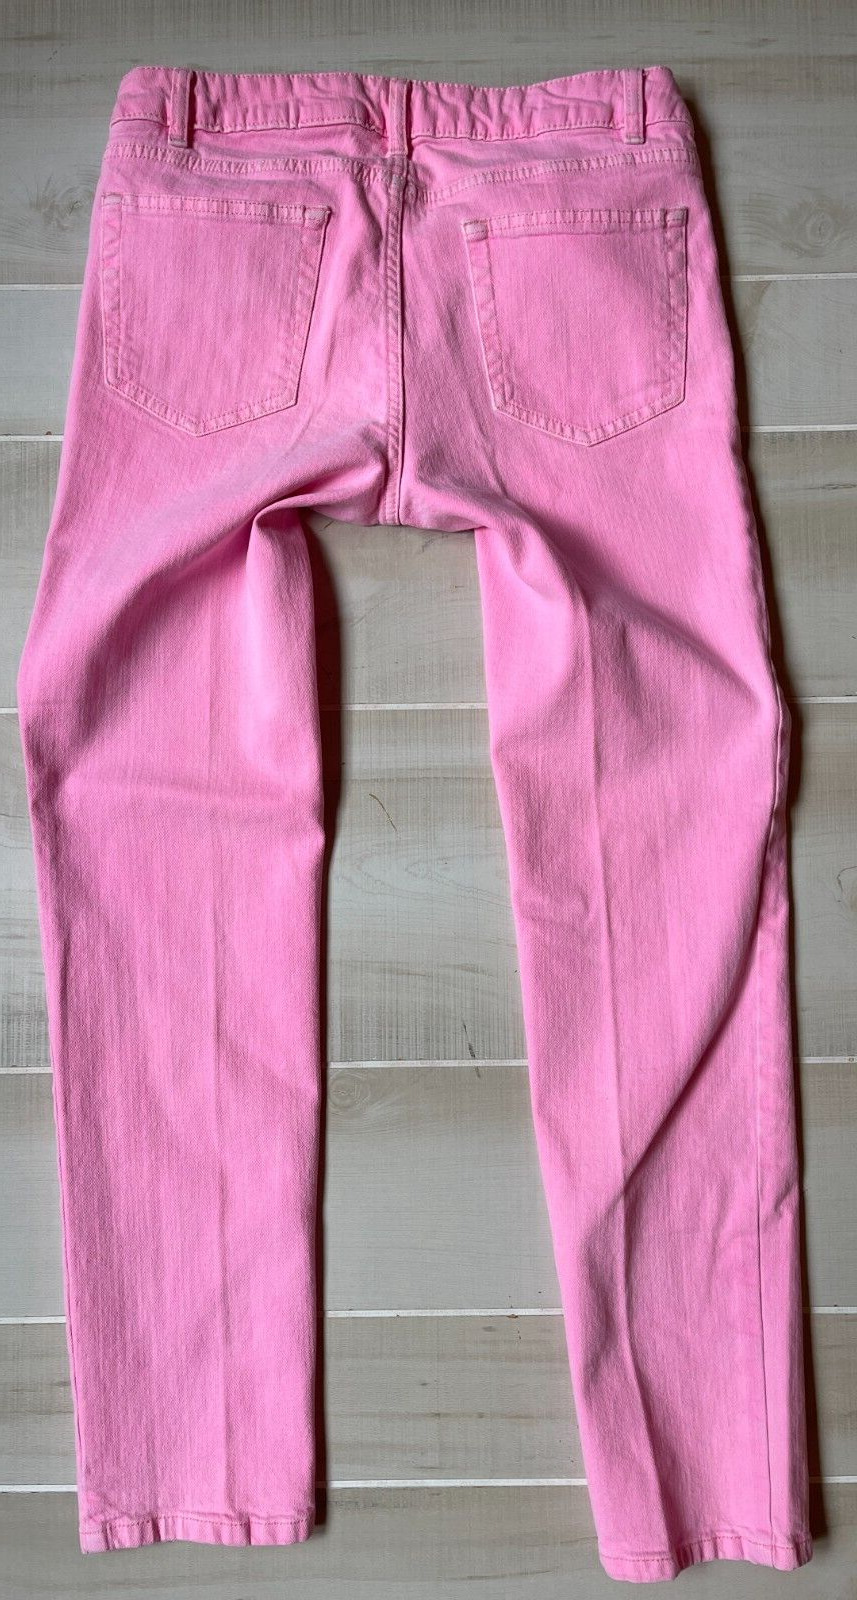 Joe Fresh slim pink denim jeans size 6 28" inseam women's